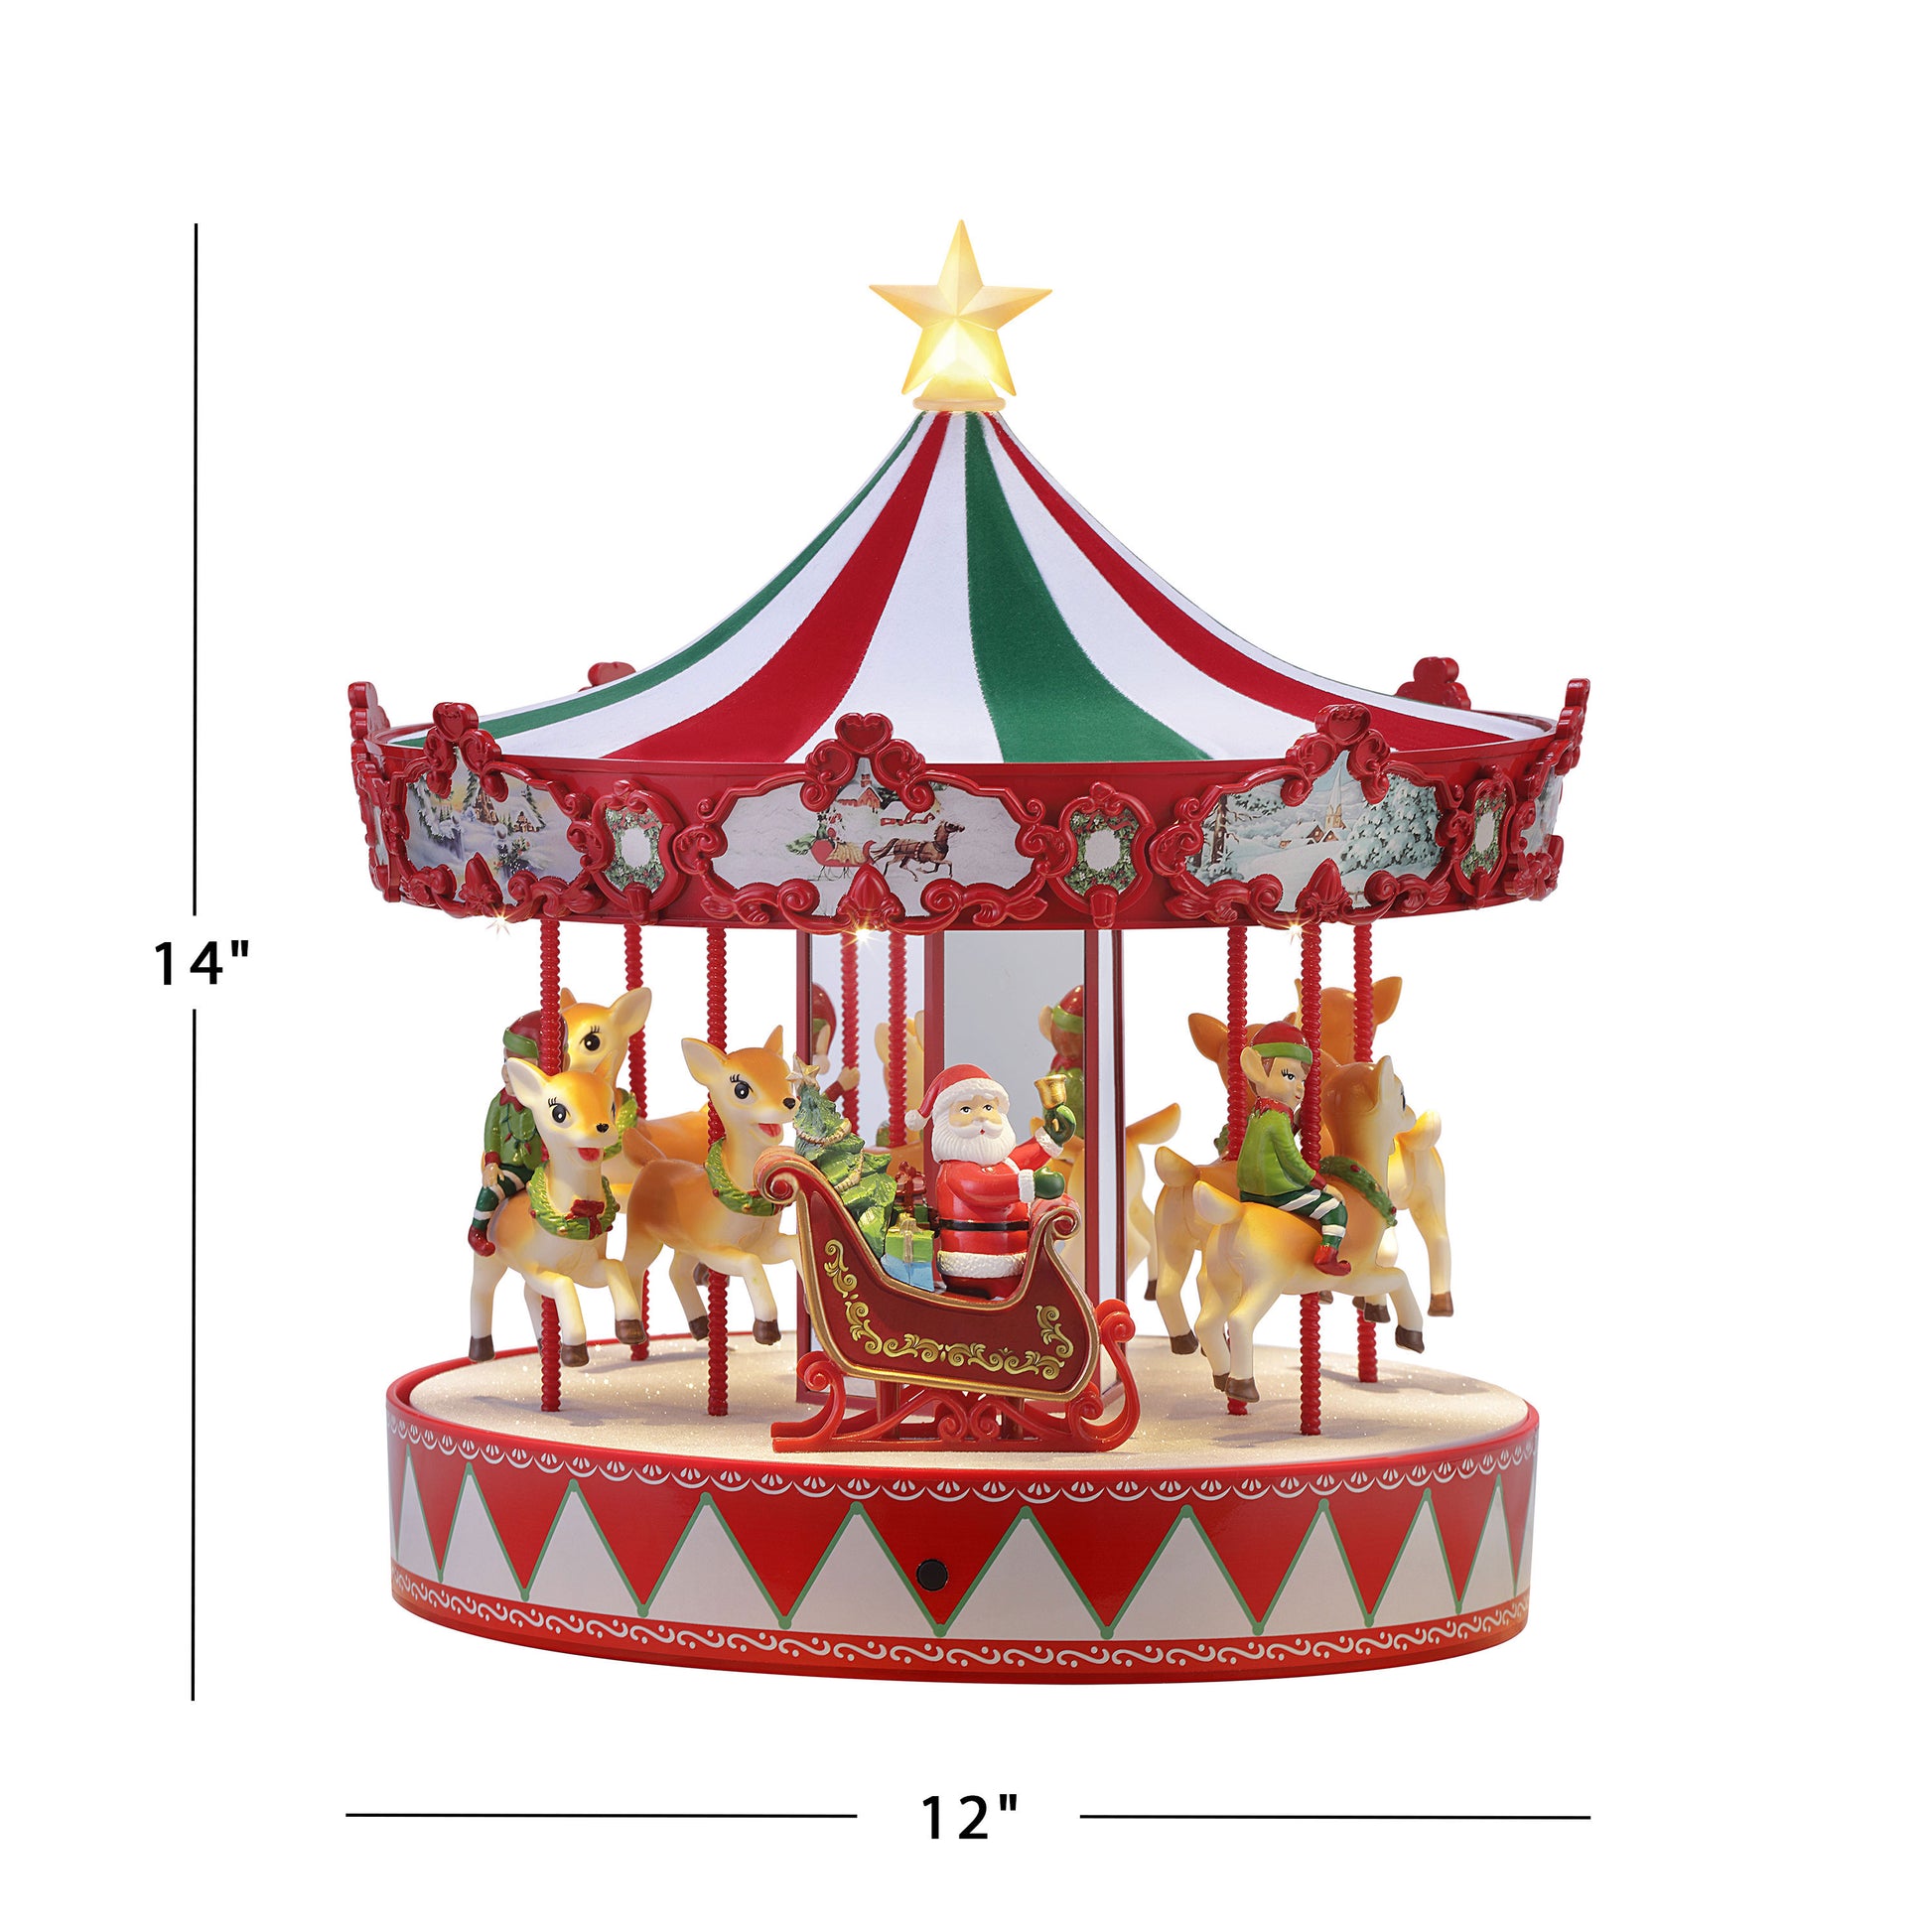 14" Animated Vintage Carousel